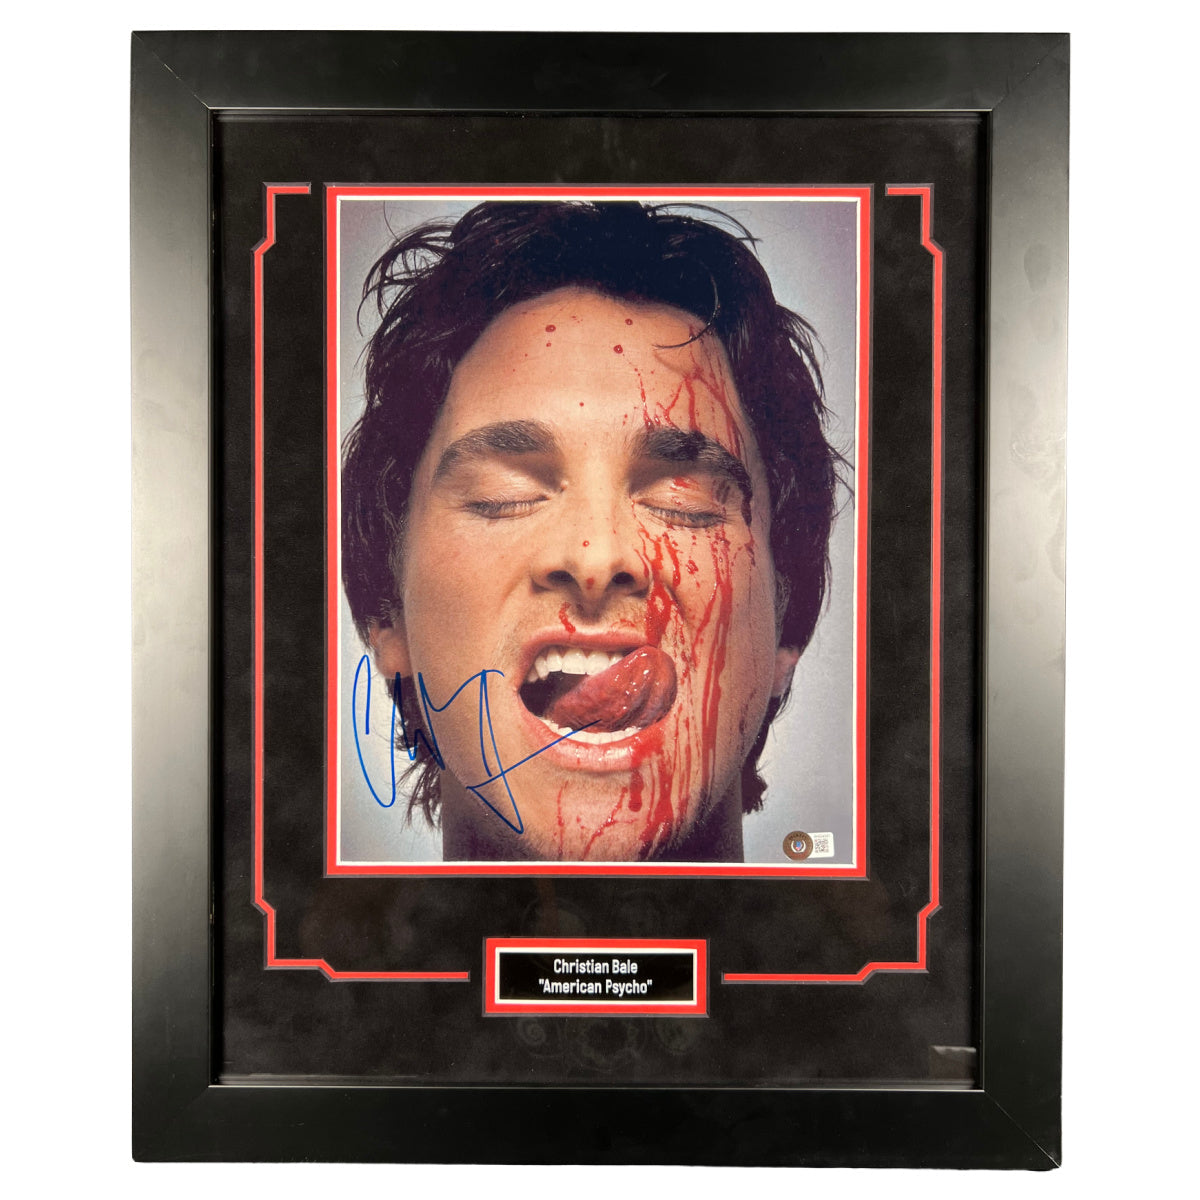 Christian Bale Signed Autograph 11x14 Photo American Psycho FRAMED BAS COA